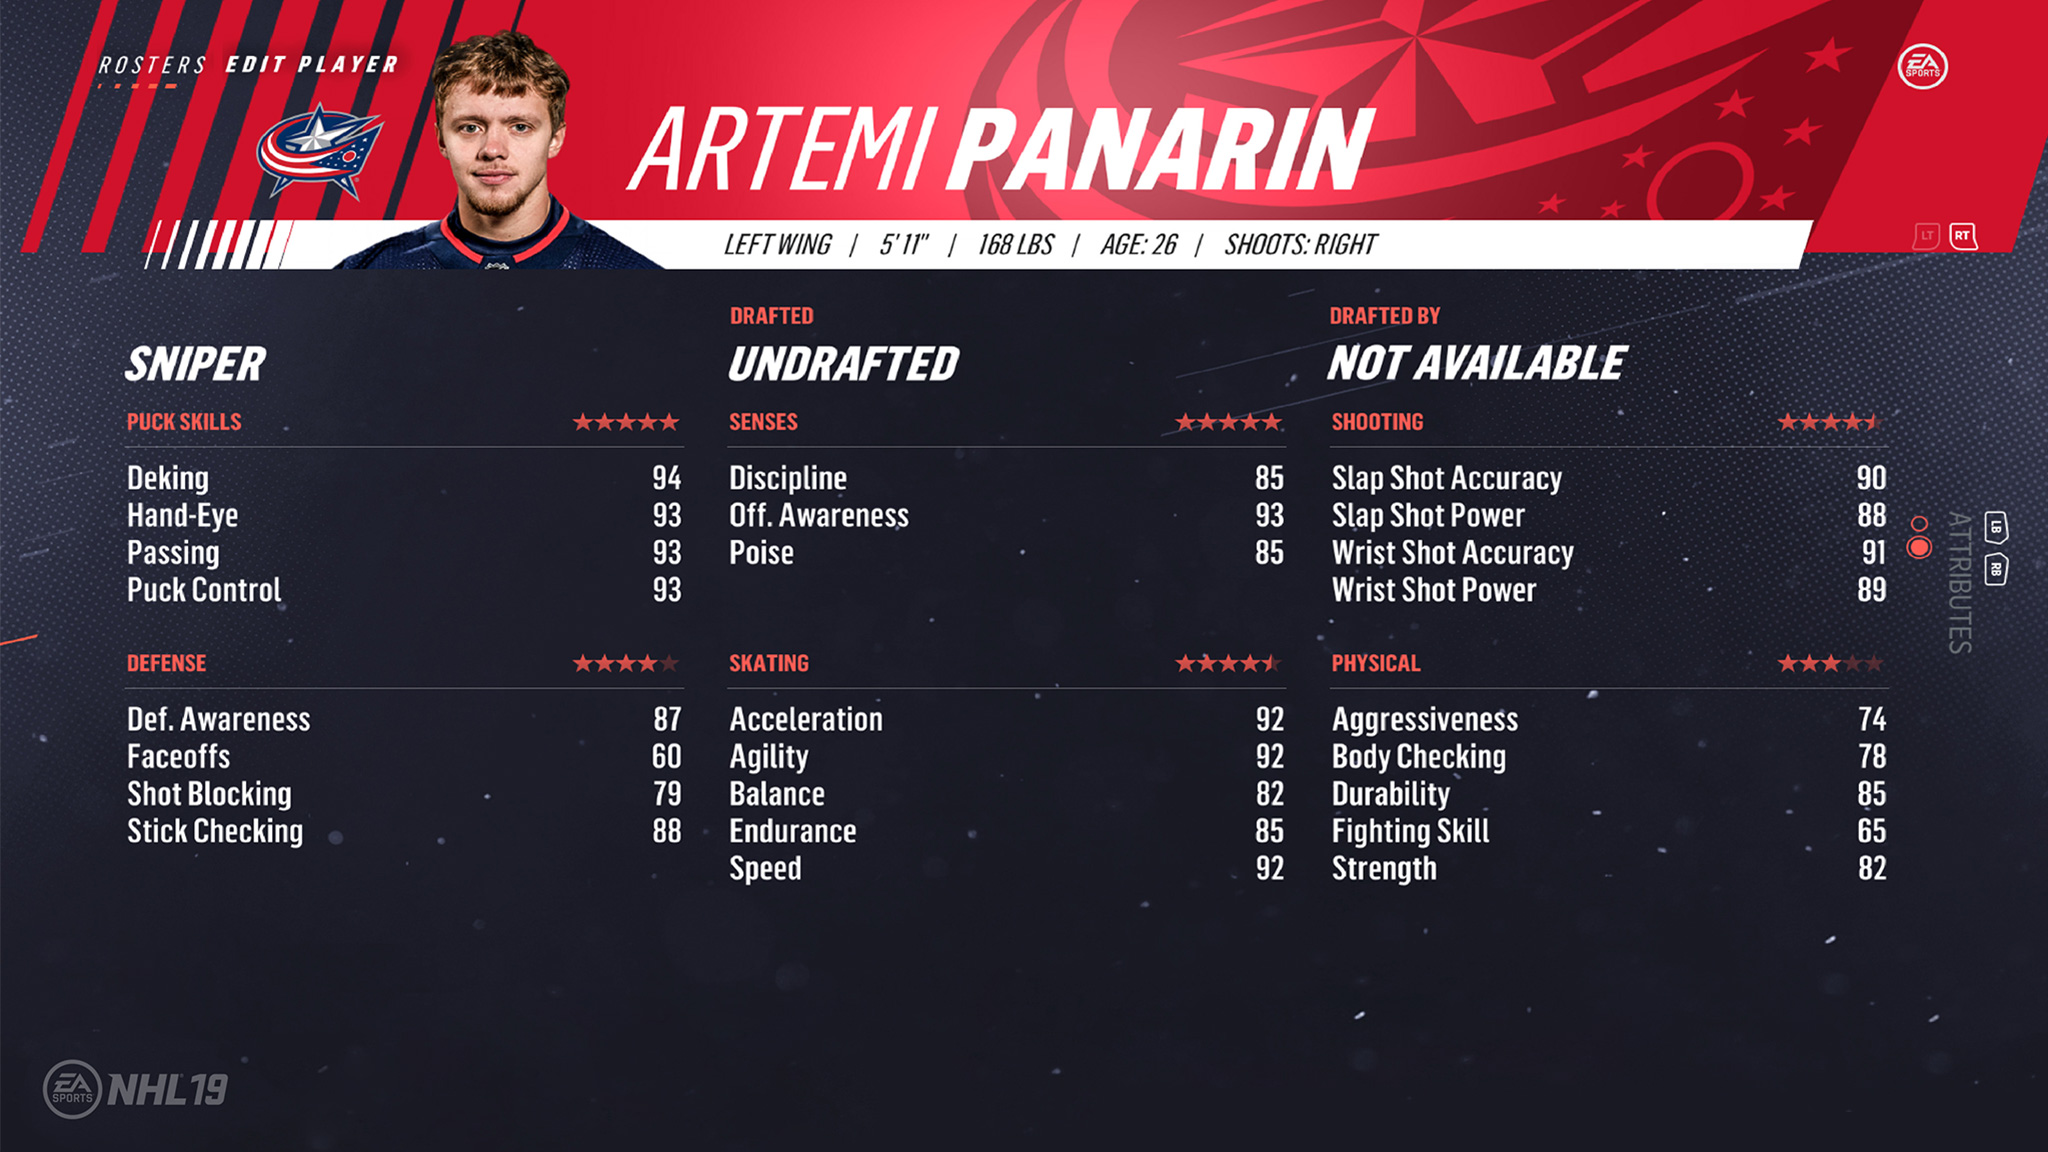 Artemi Panarin's full stats